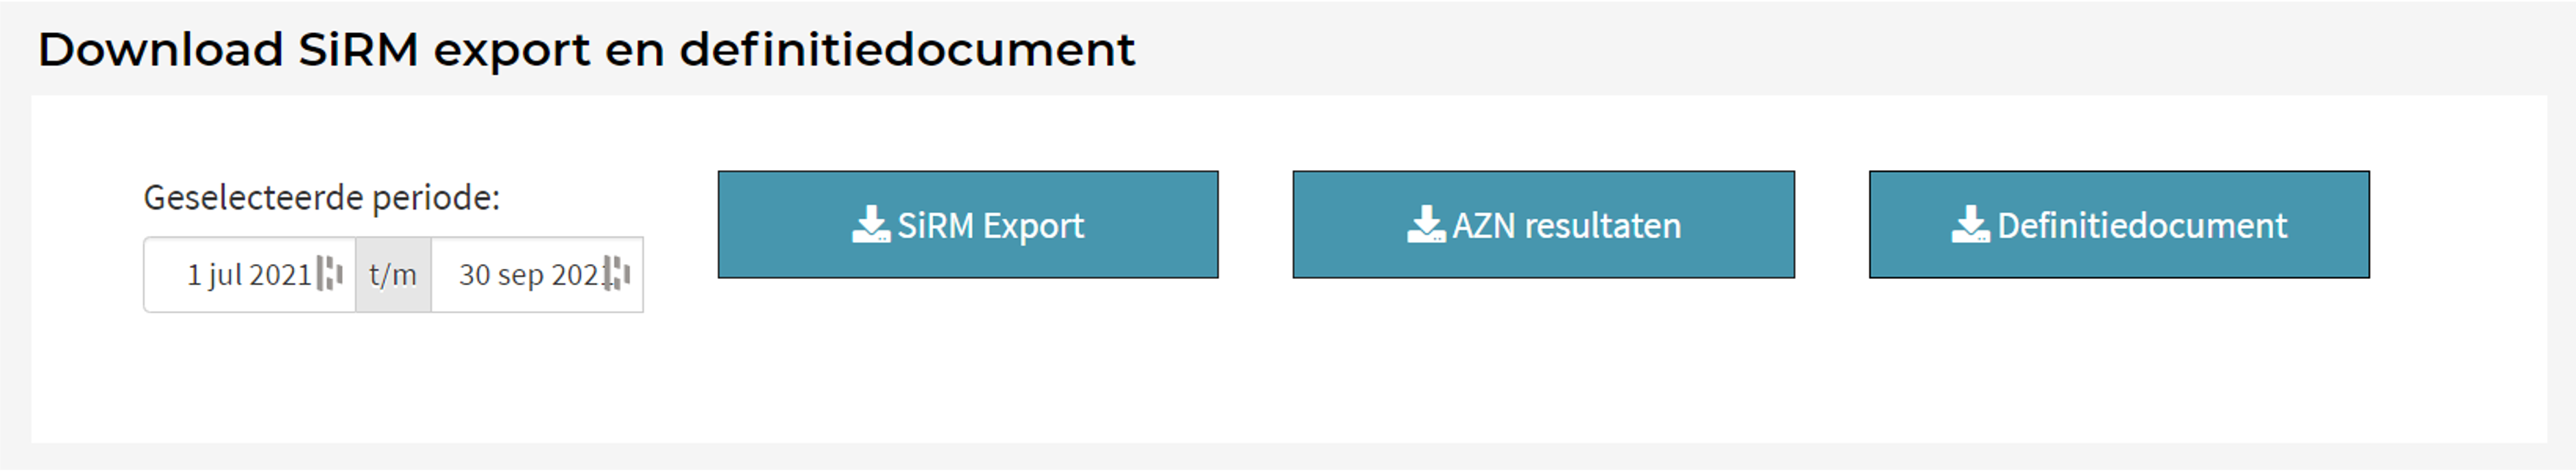 AZN kwaliteitsindicatoren dashboard export